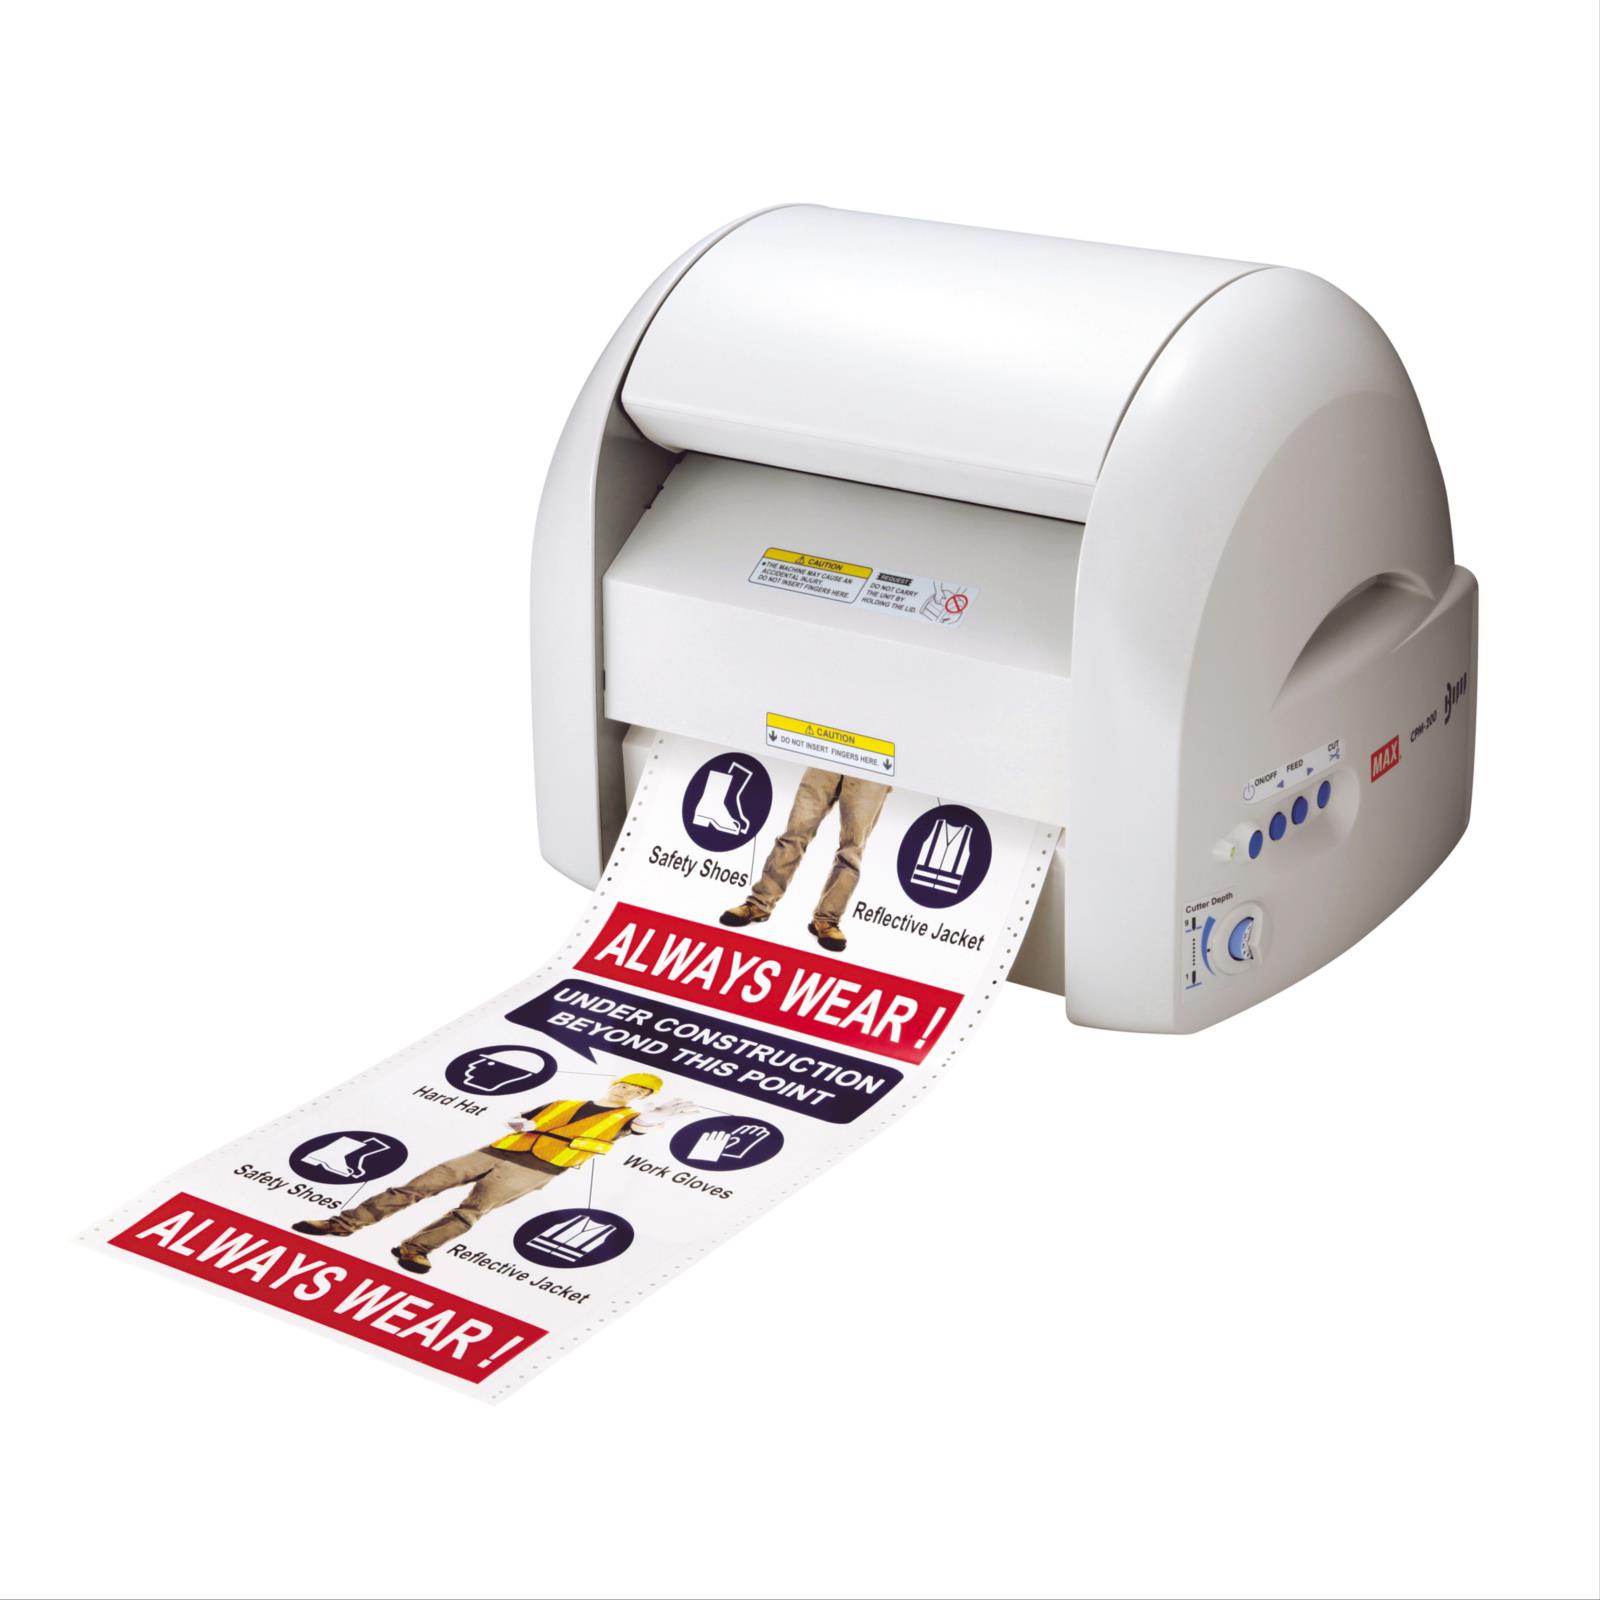 CPM 200GU Label Printing/Cutting Machine and Ribbons